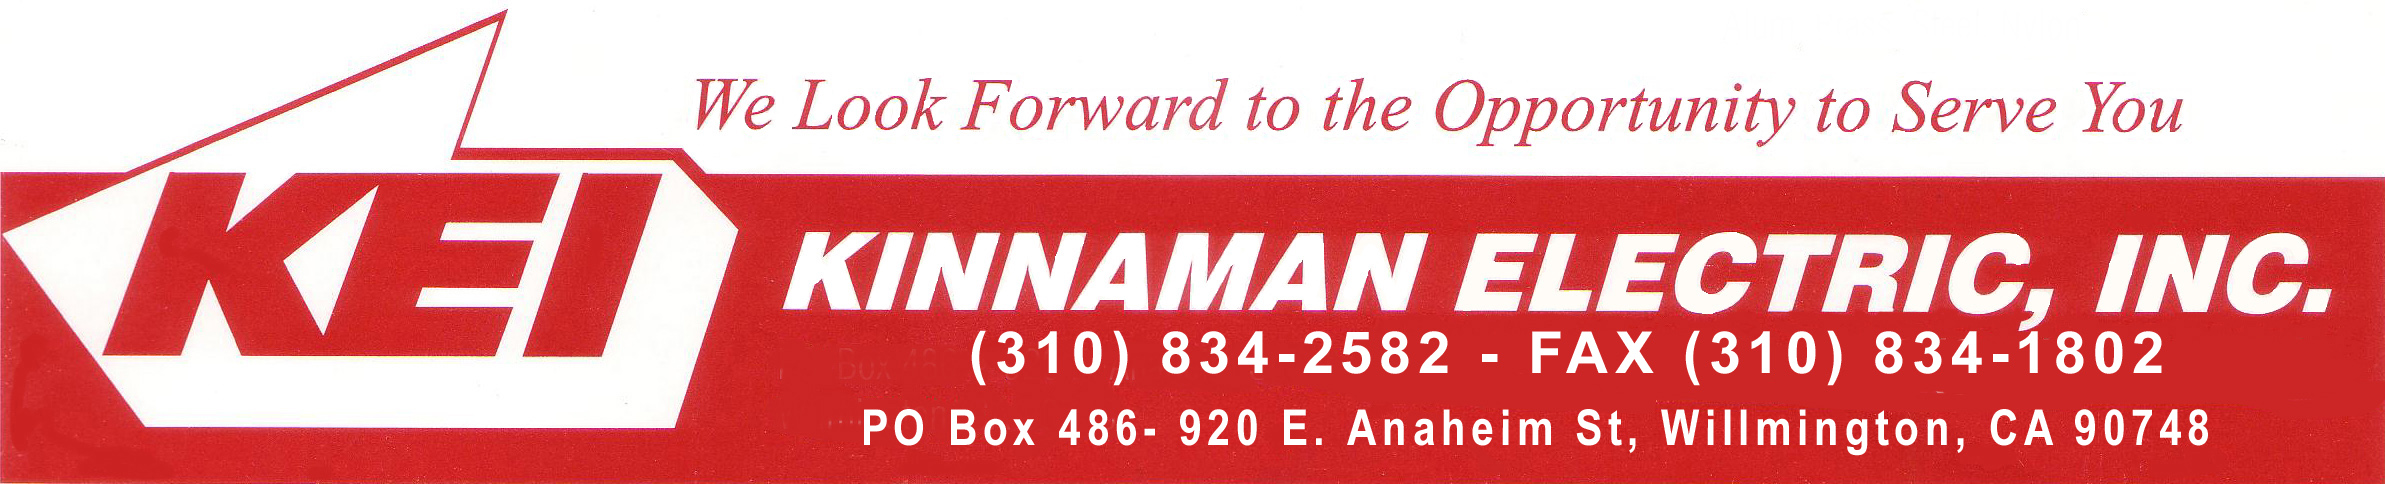 Kinnaman Electric, Inc